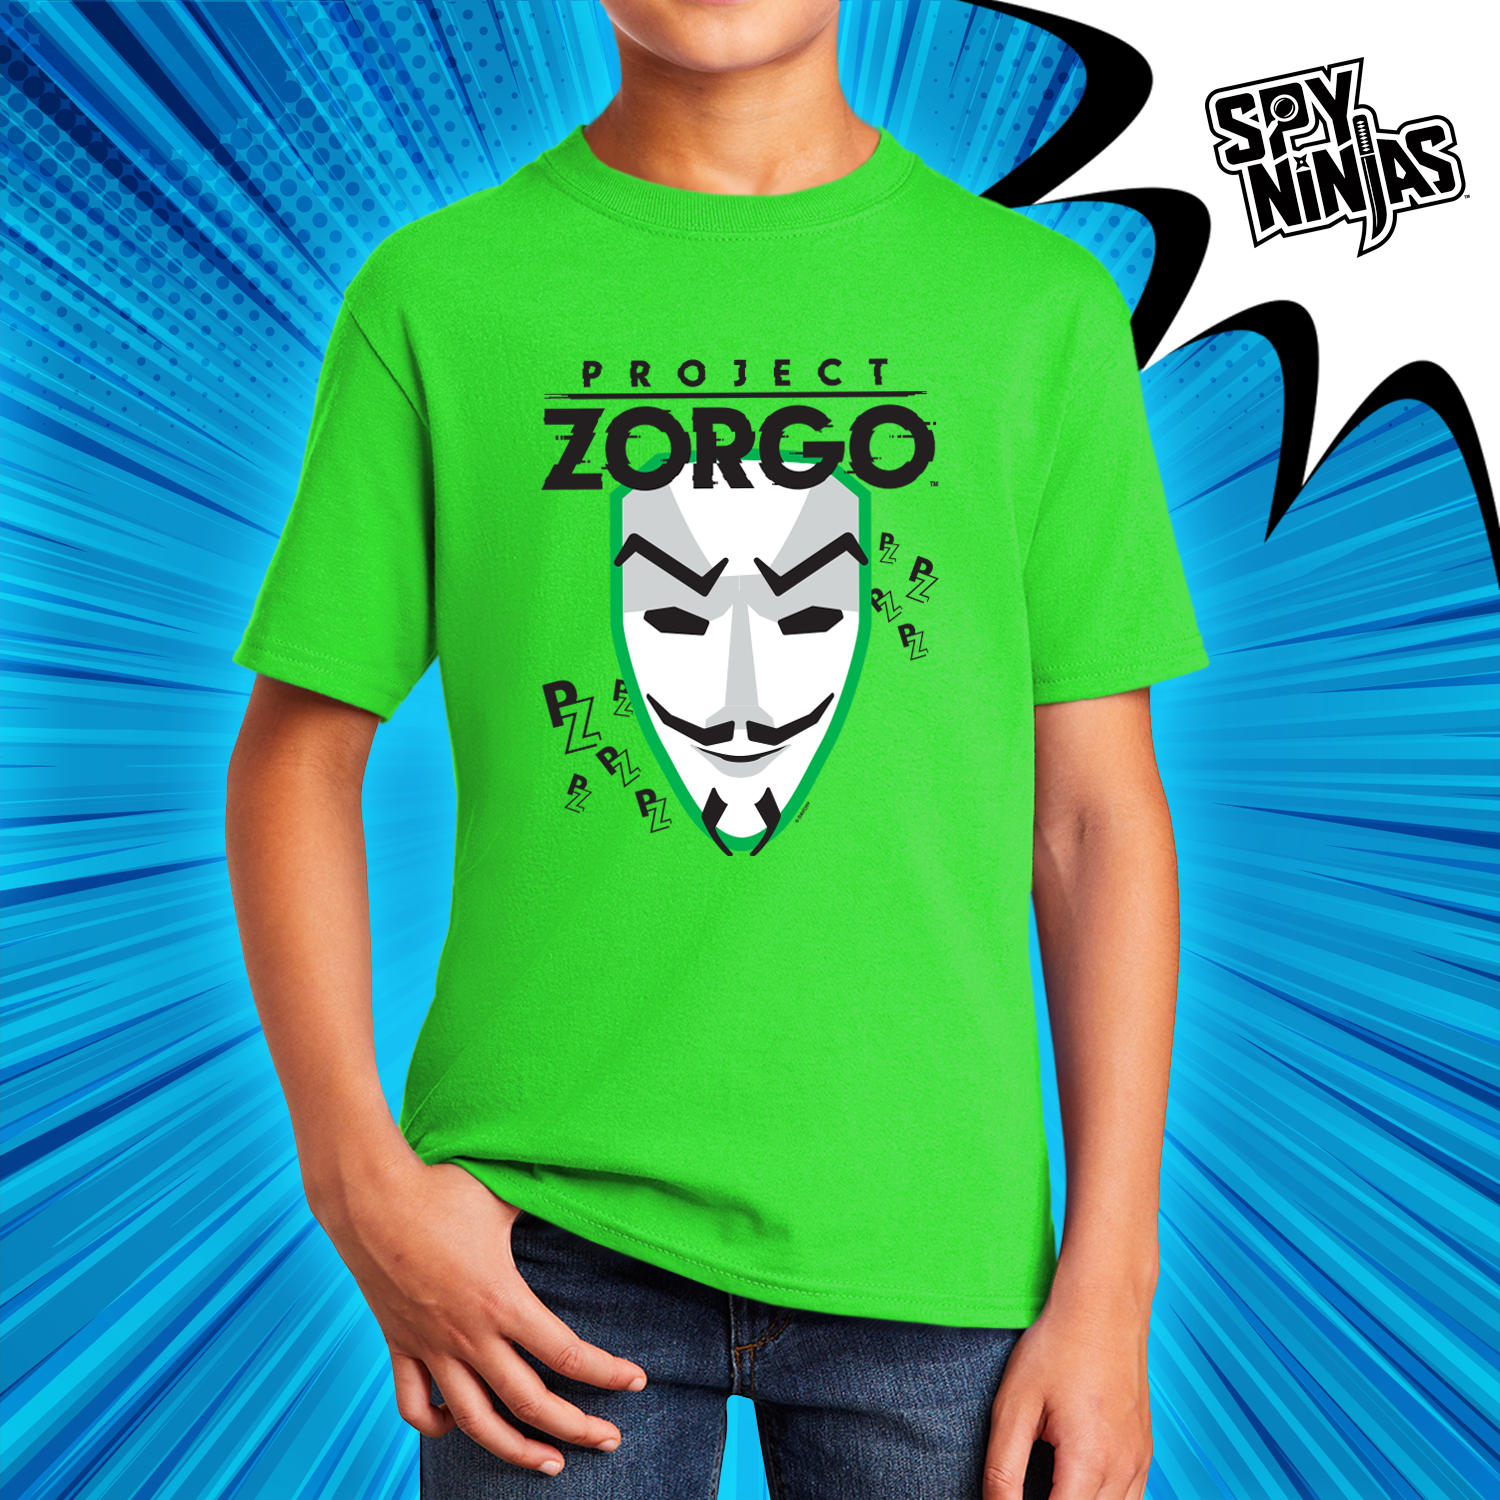 Project Zorgo‚Ñ¢ Youth Short Sleeve T-Shirt